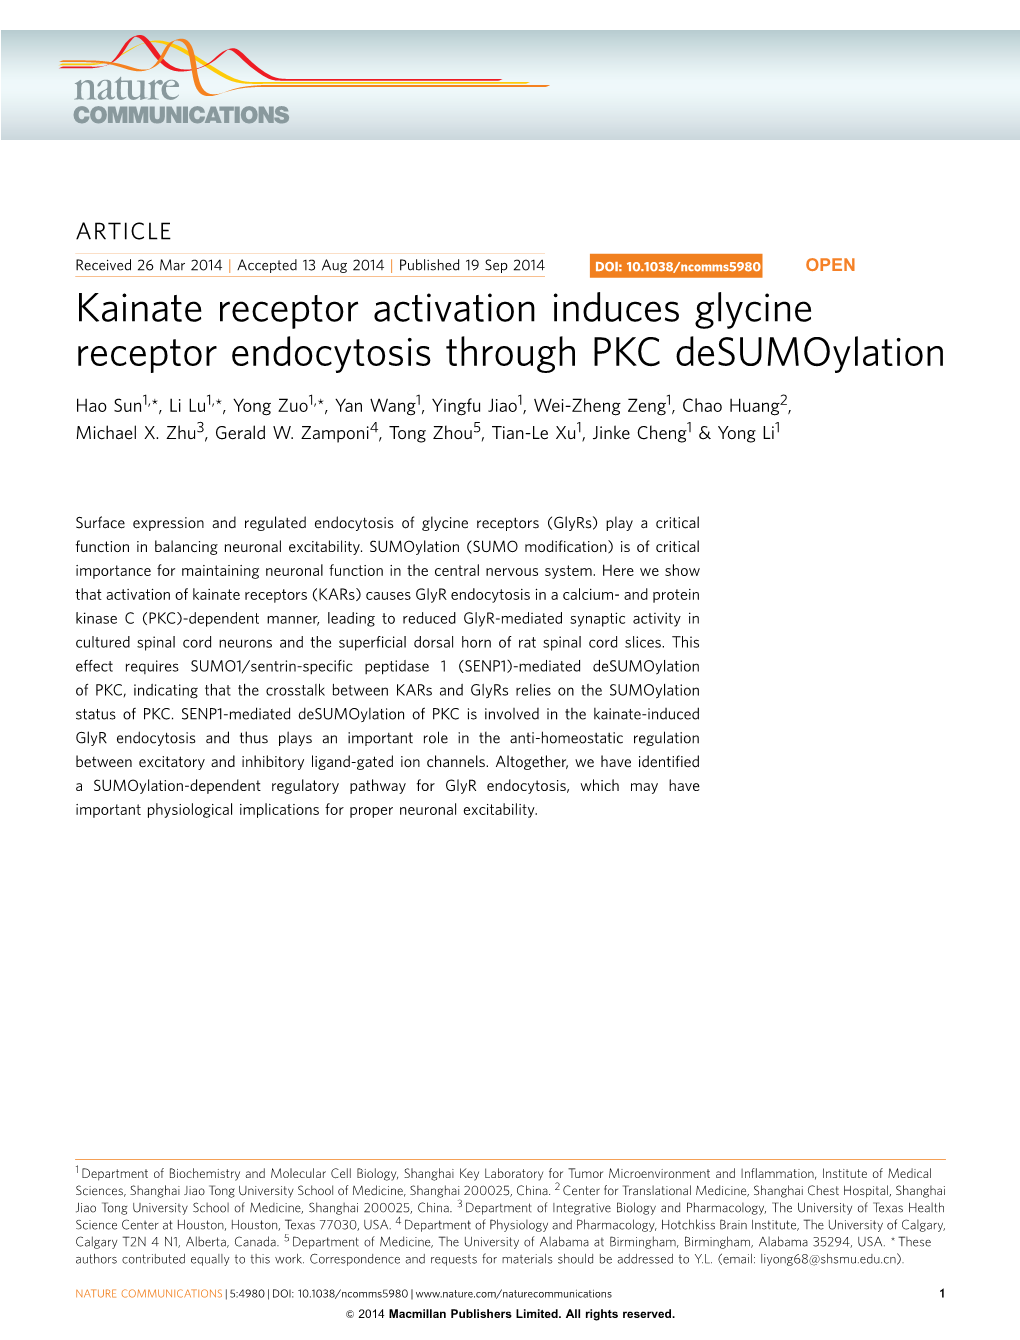 Kainate Receptor Activation Induces Glycine Receptor Endocytosis Through PKC Desumoylation